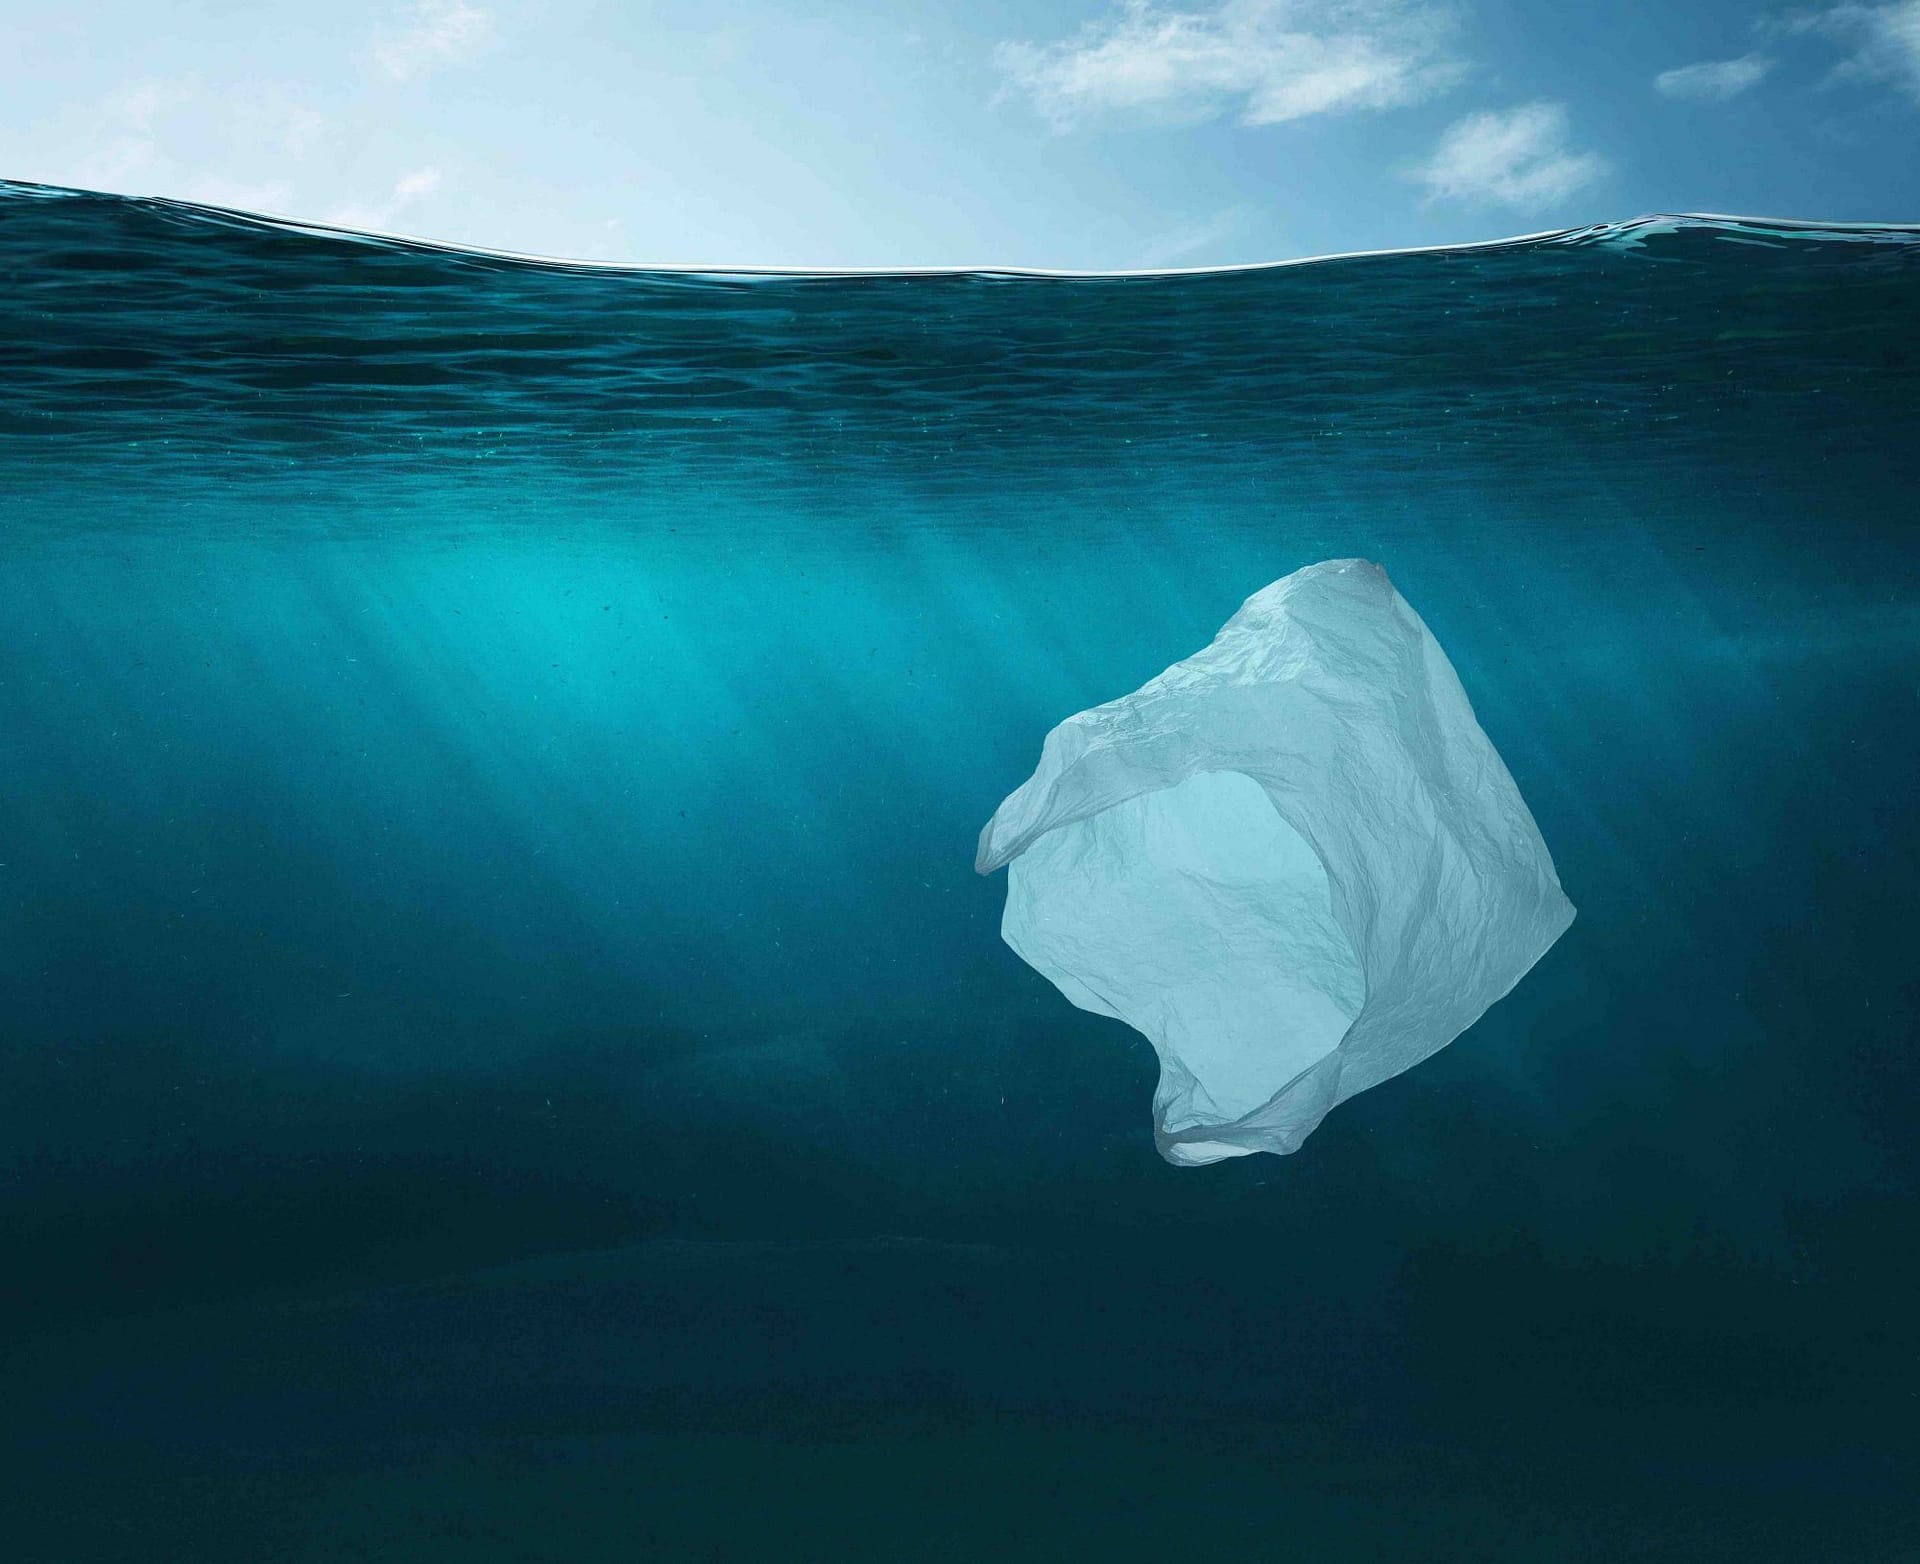 environmental impact of plastic bags